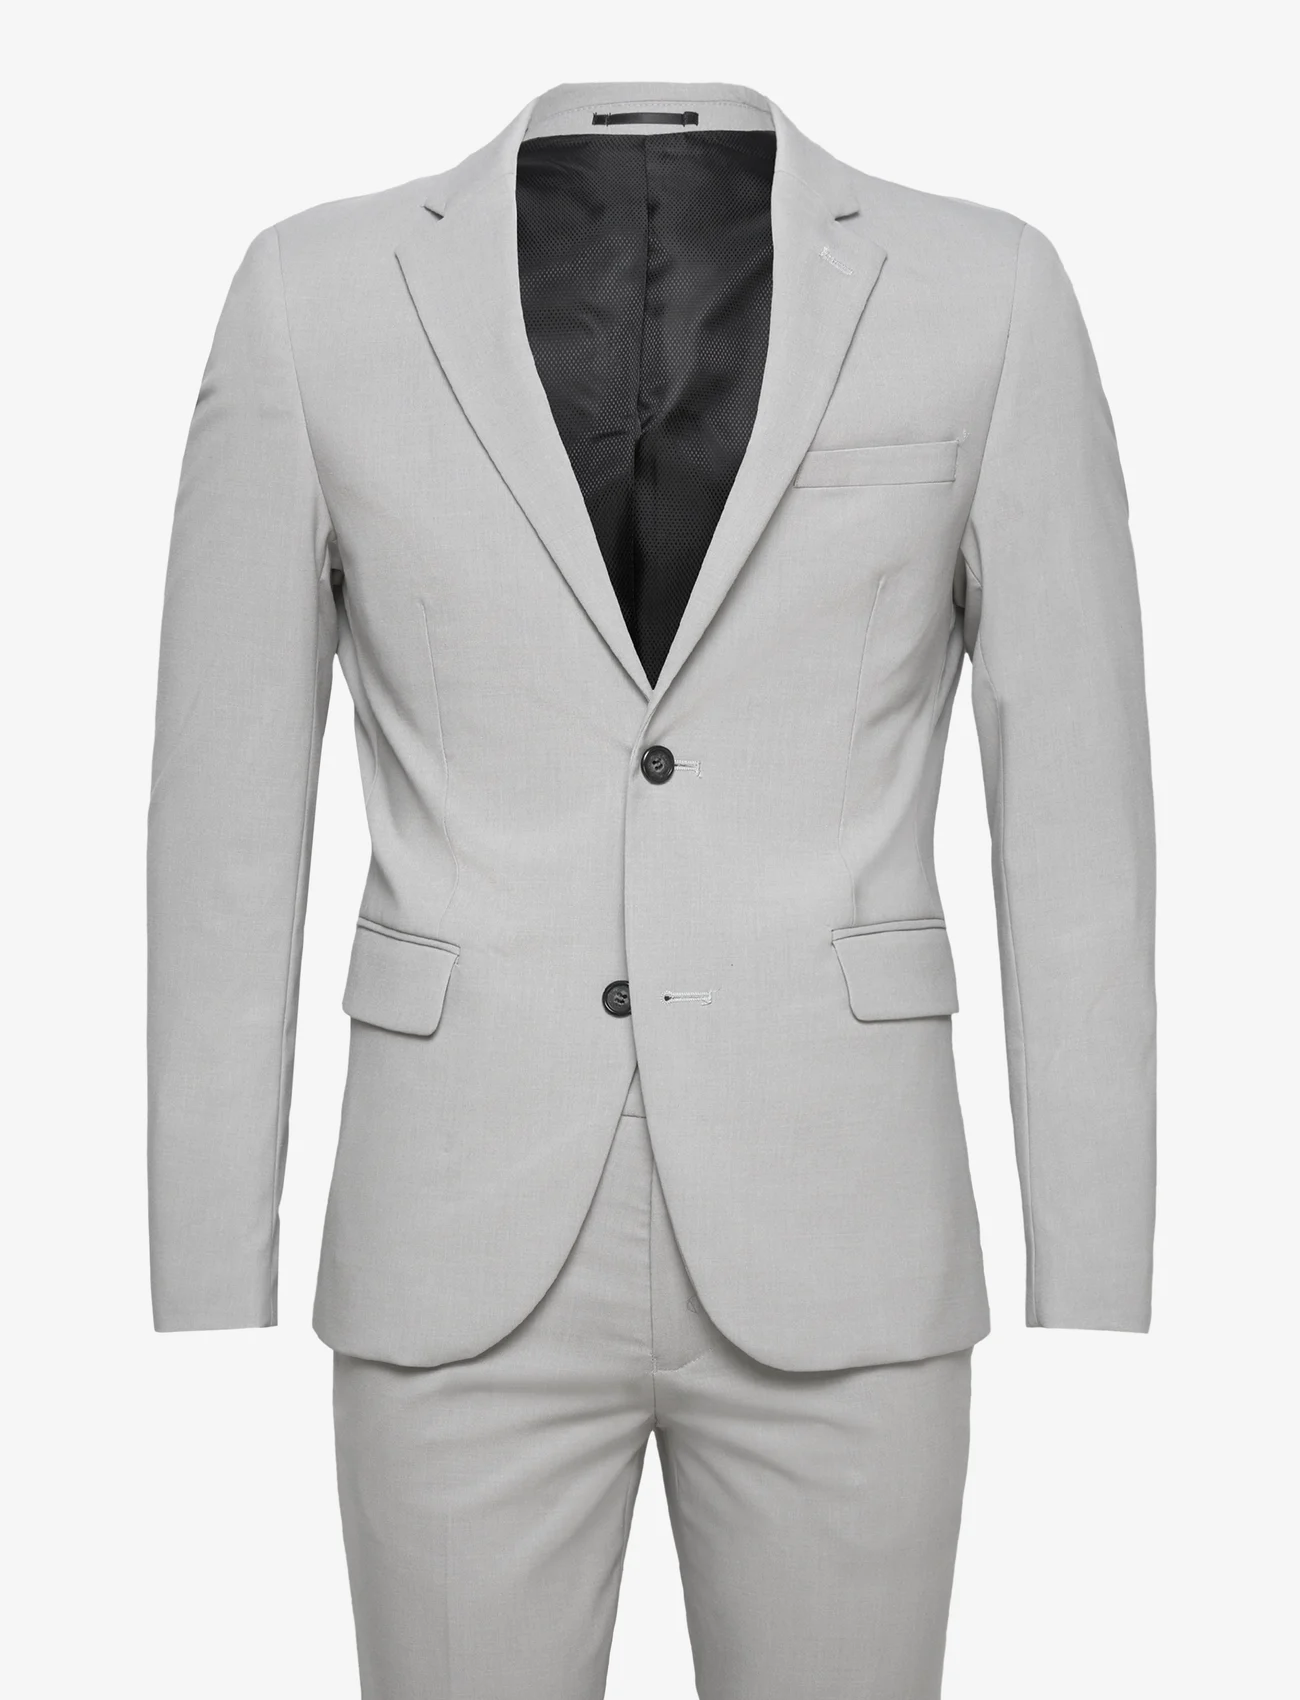 Lindbergh - Plain mens suit - zweireiher anzüge - lt grey mix - 0